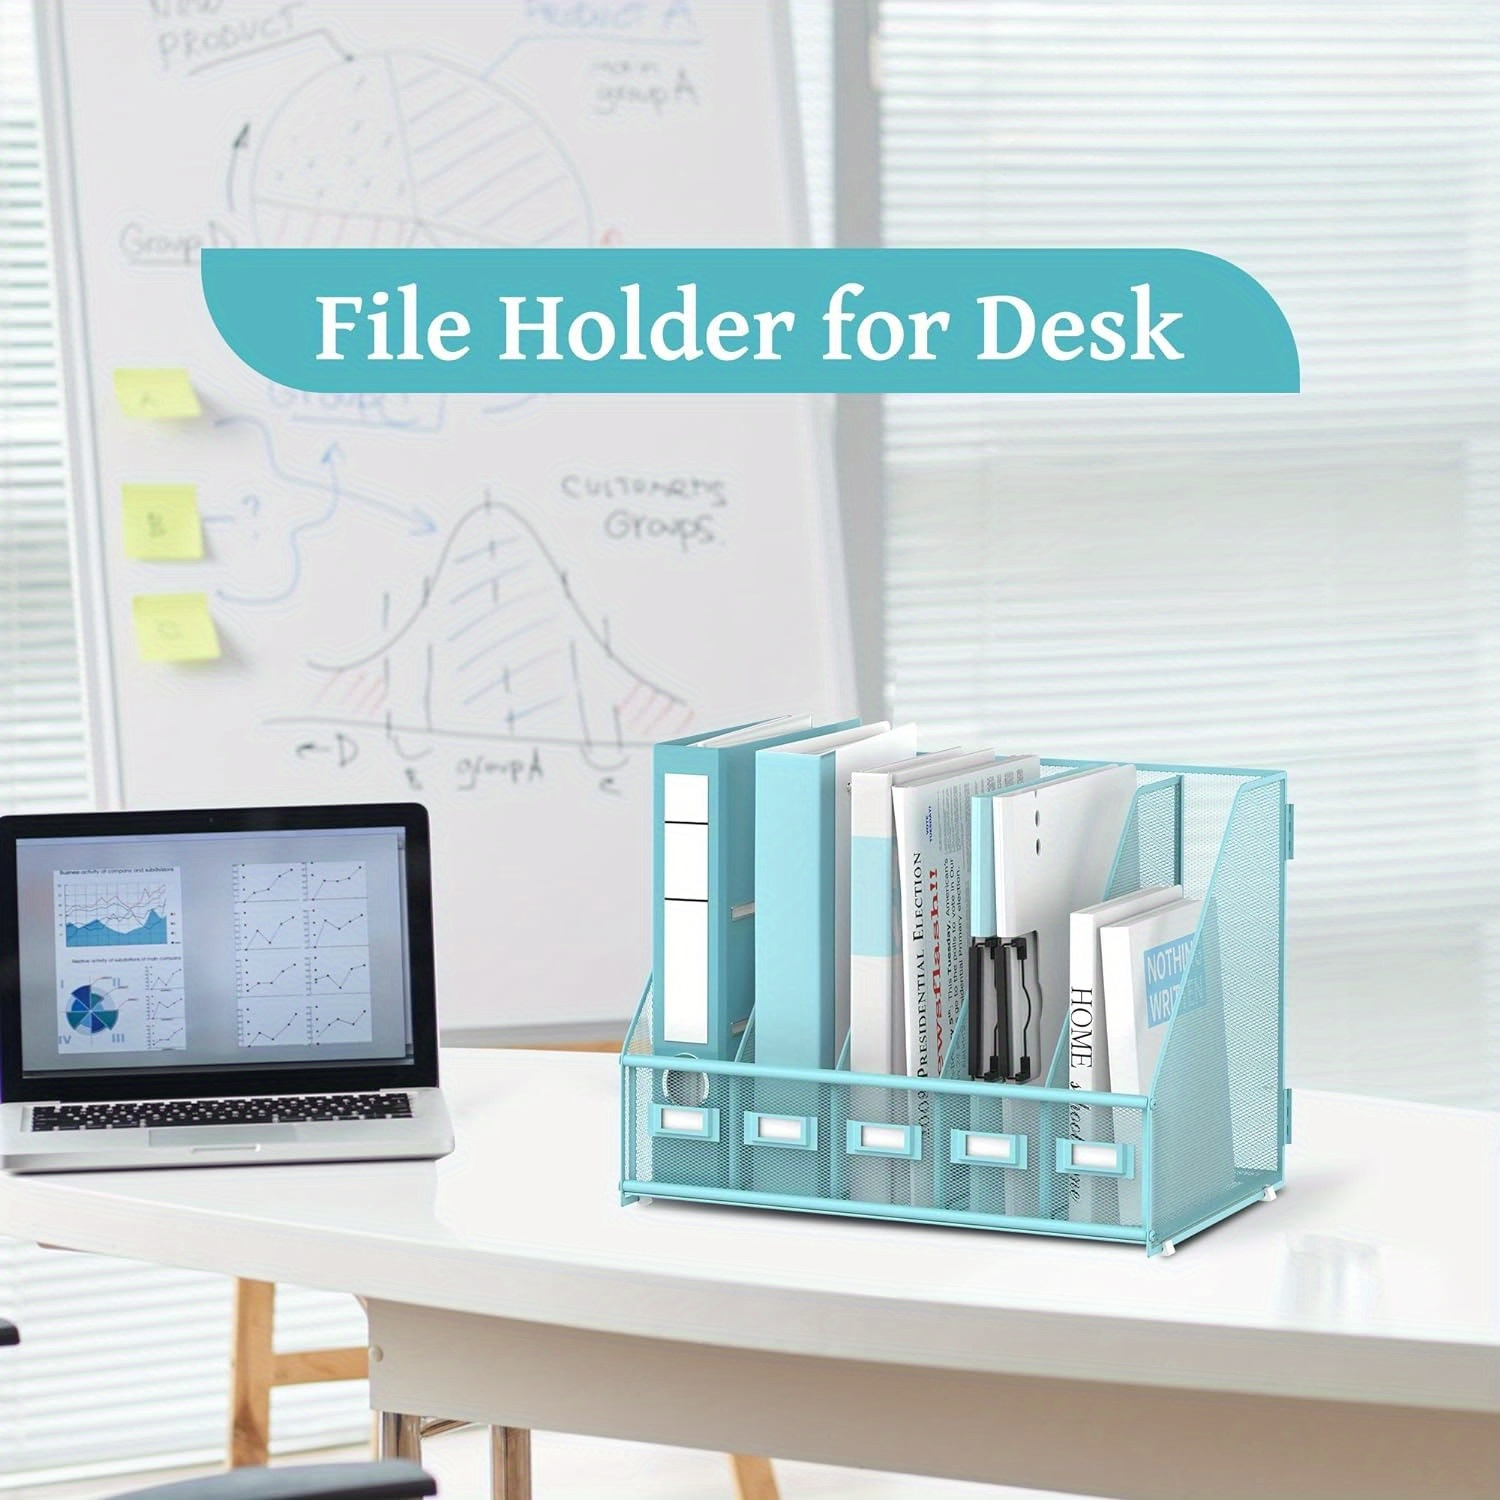 

Sharkwoods Desk Organizers With 5 Vertical Compartments Metal Desk Magazine File Holder Rack File Organizer For Office Desktop, Home Workspace